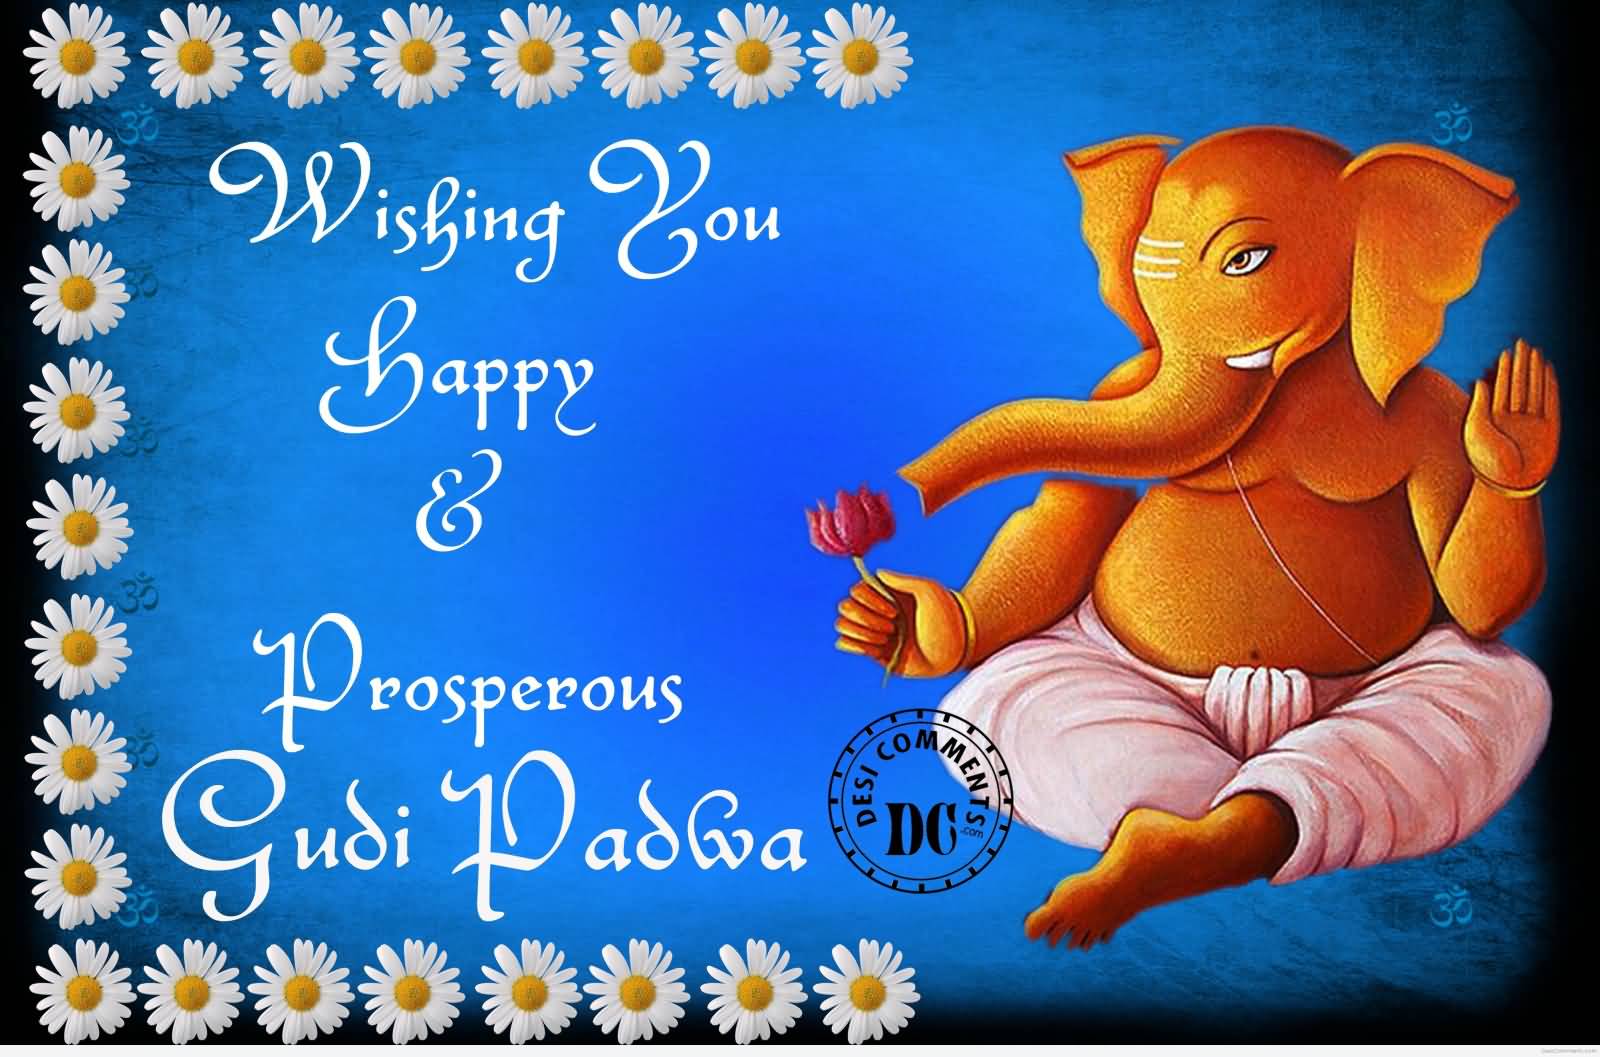 Wishing You Happy & Prosperous Gudi Padwa Lord Ganesha Blessings